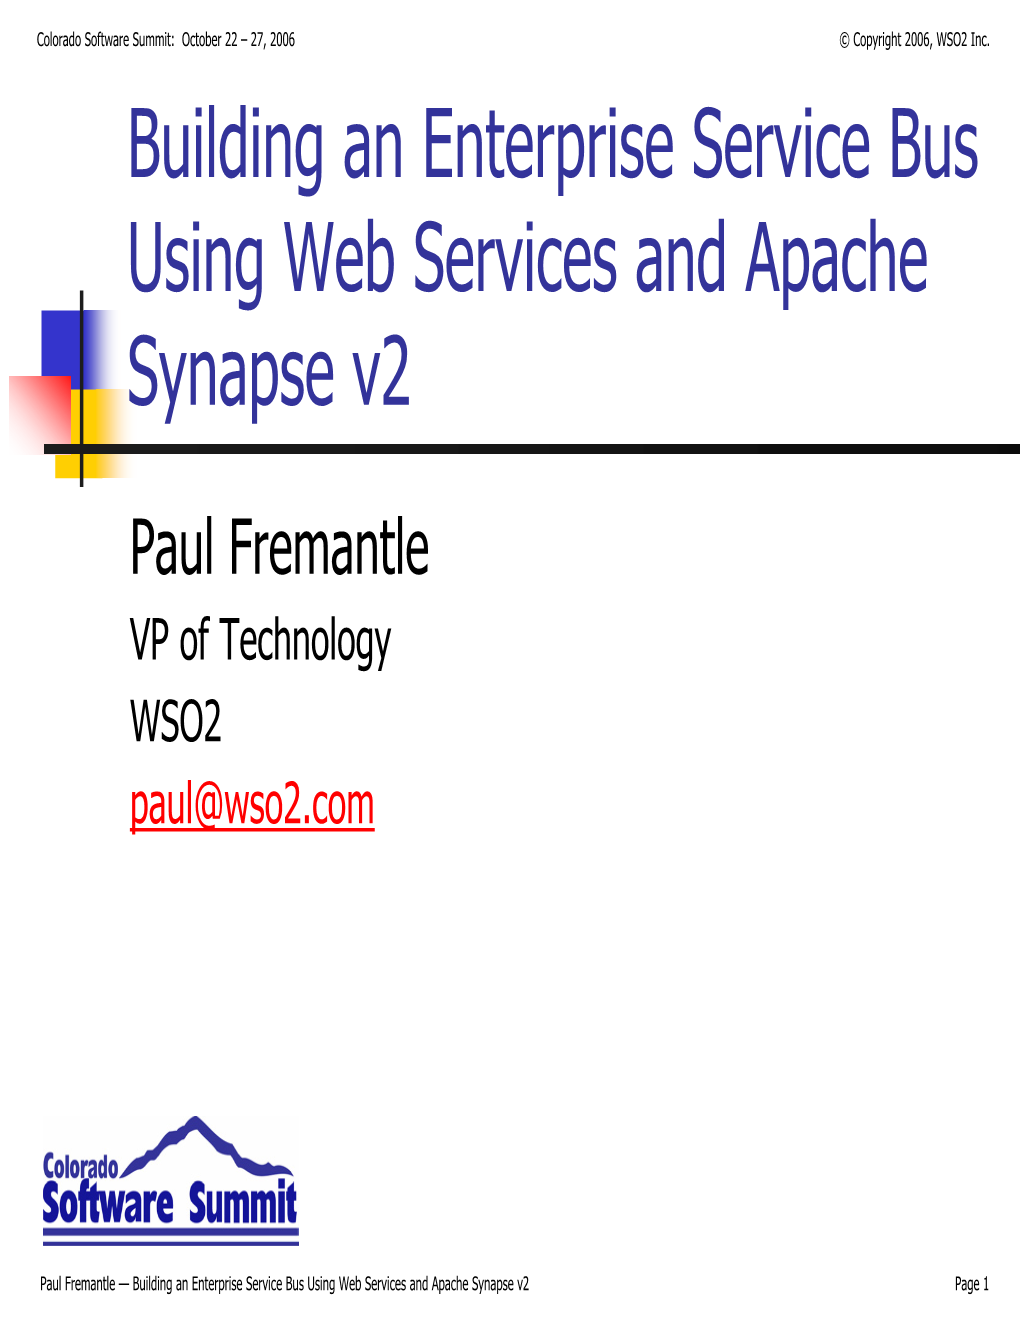 Building an Enterprise Service Bus Using Web Services and Apache Synapse V2